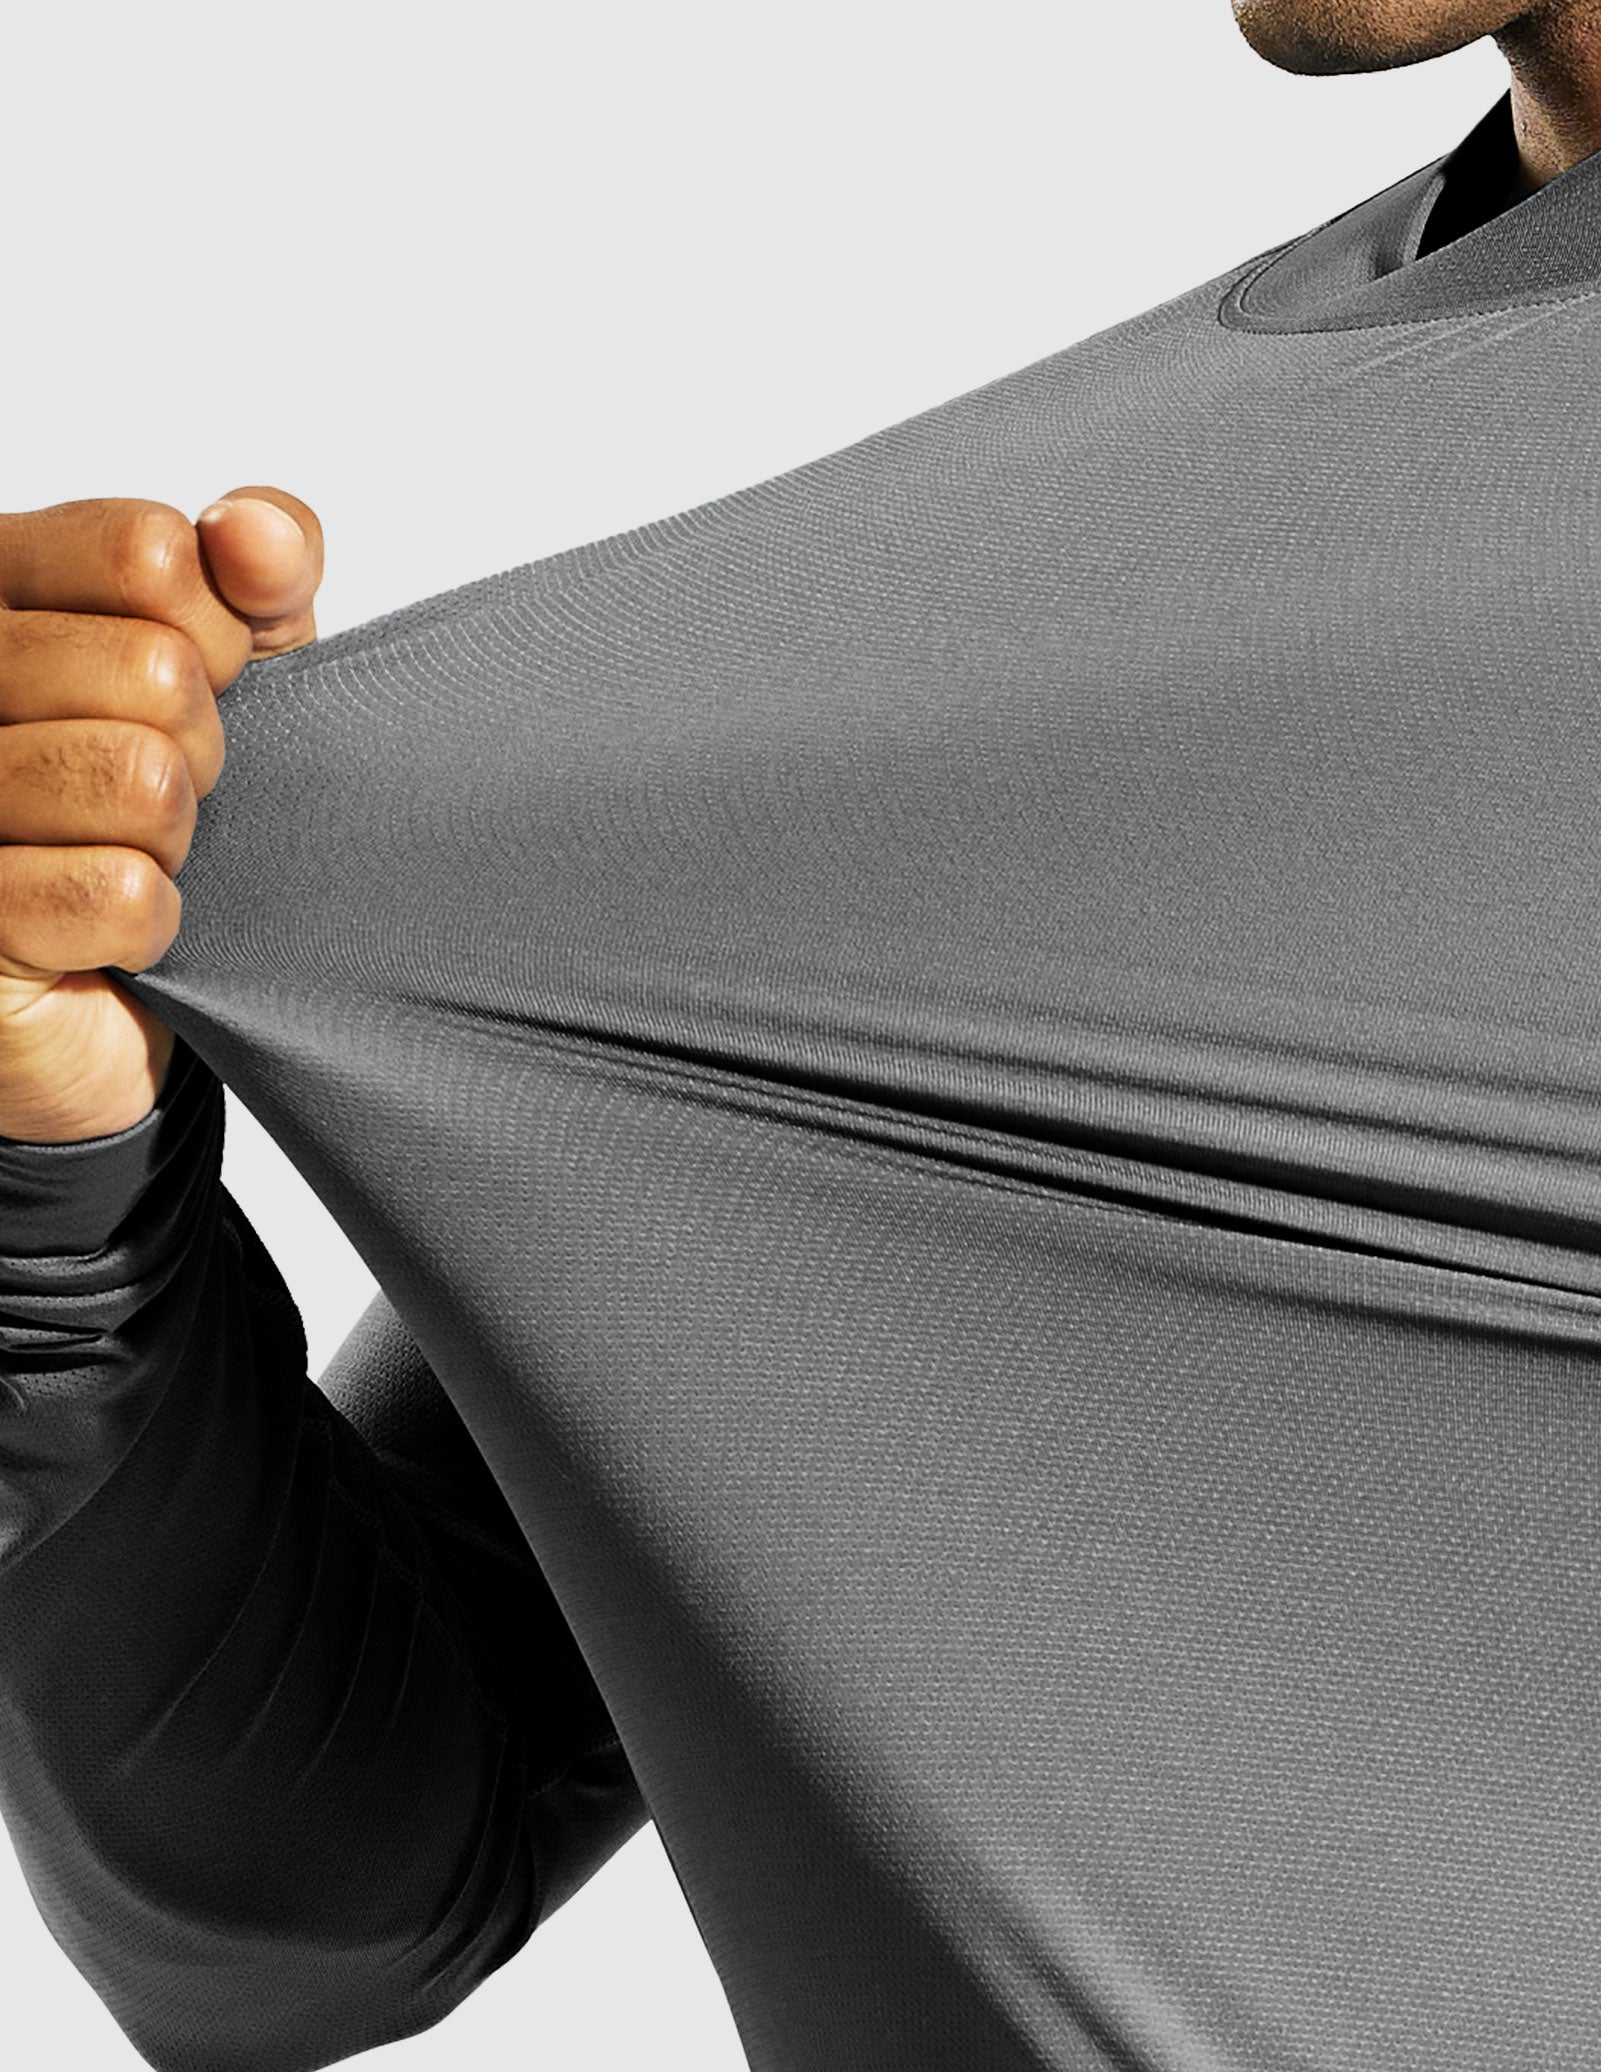 Men's Long Sleeve Mock Turtleneck Base Layer Workout Top